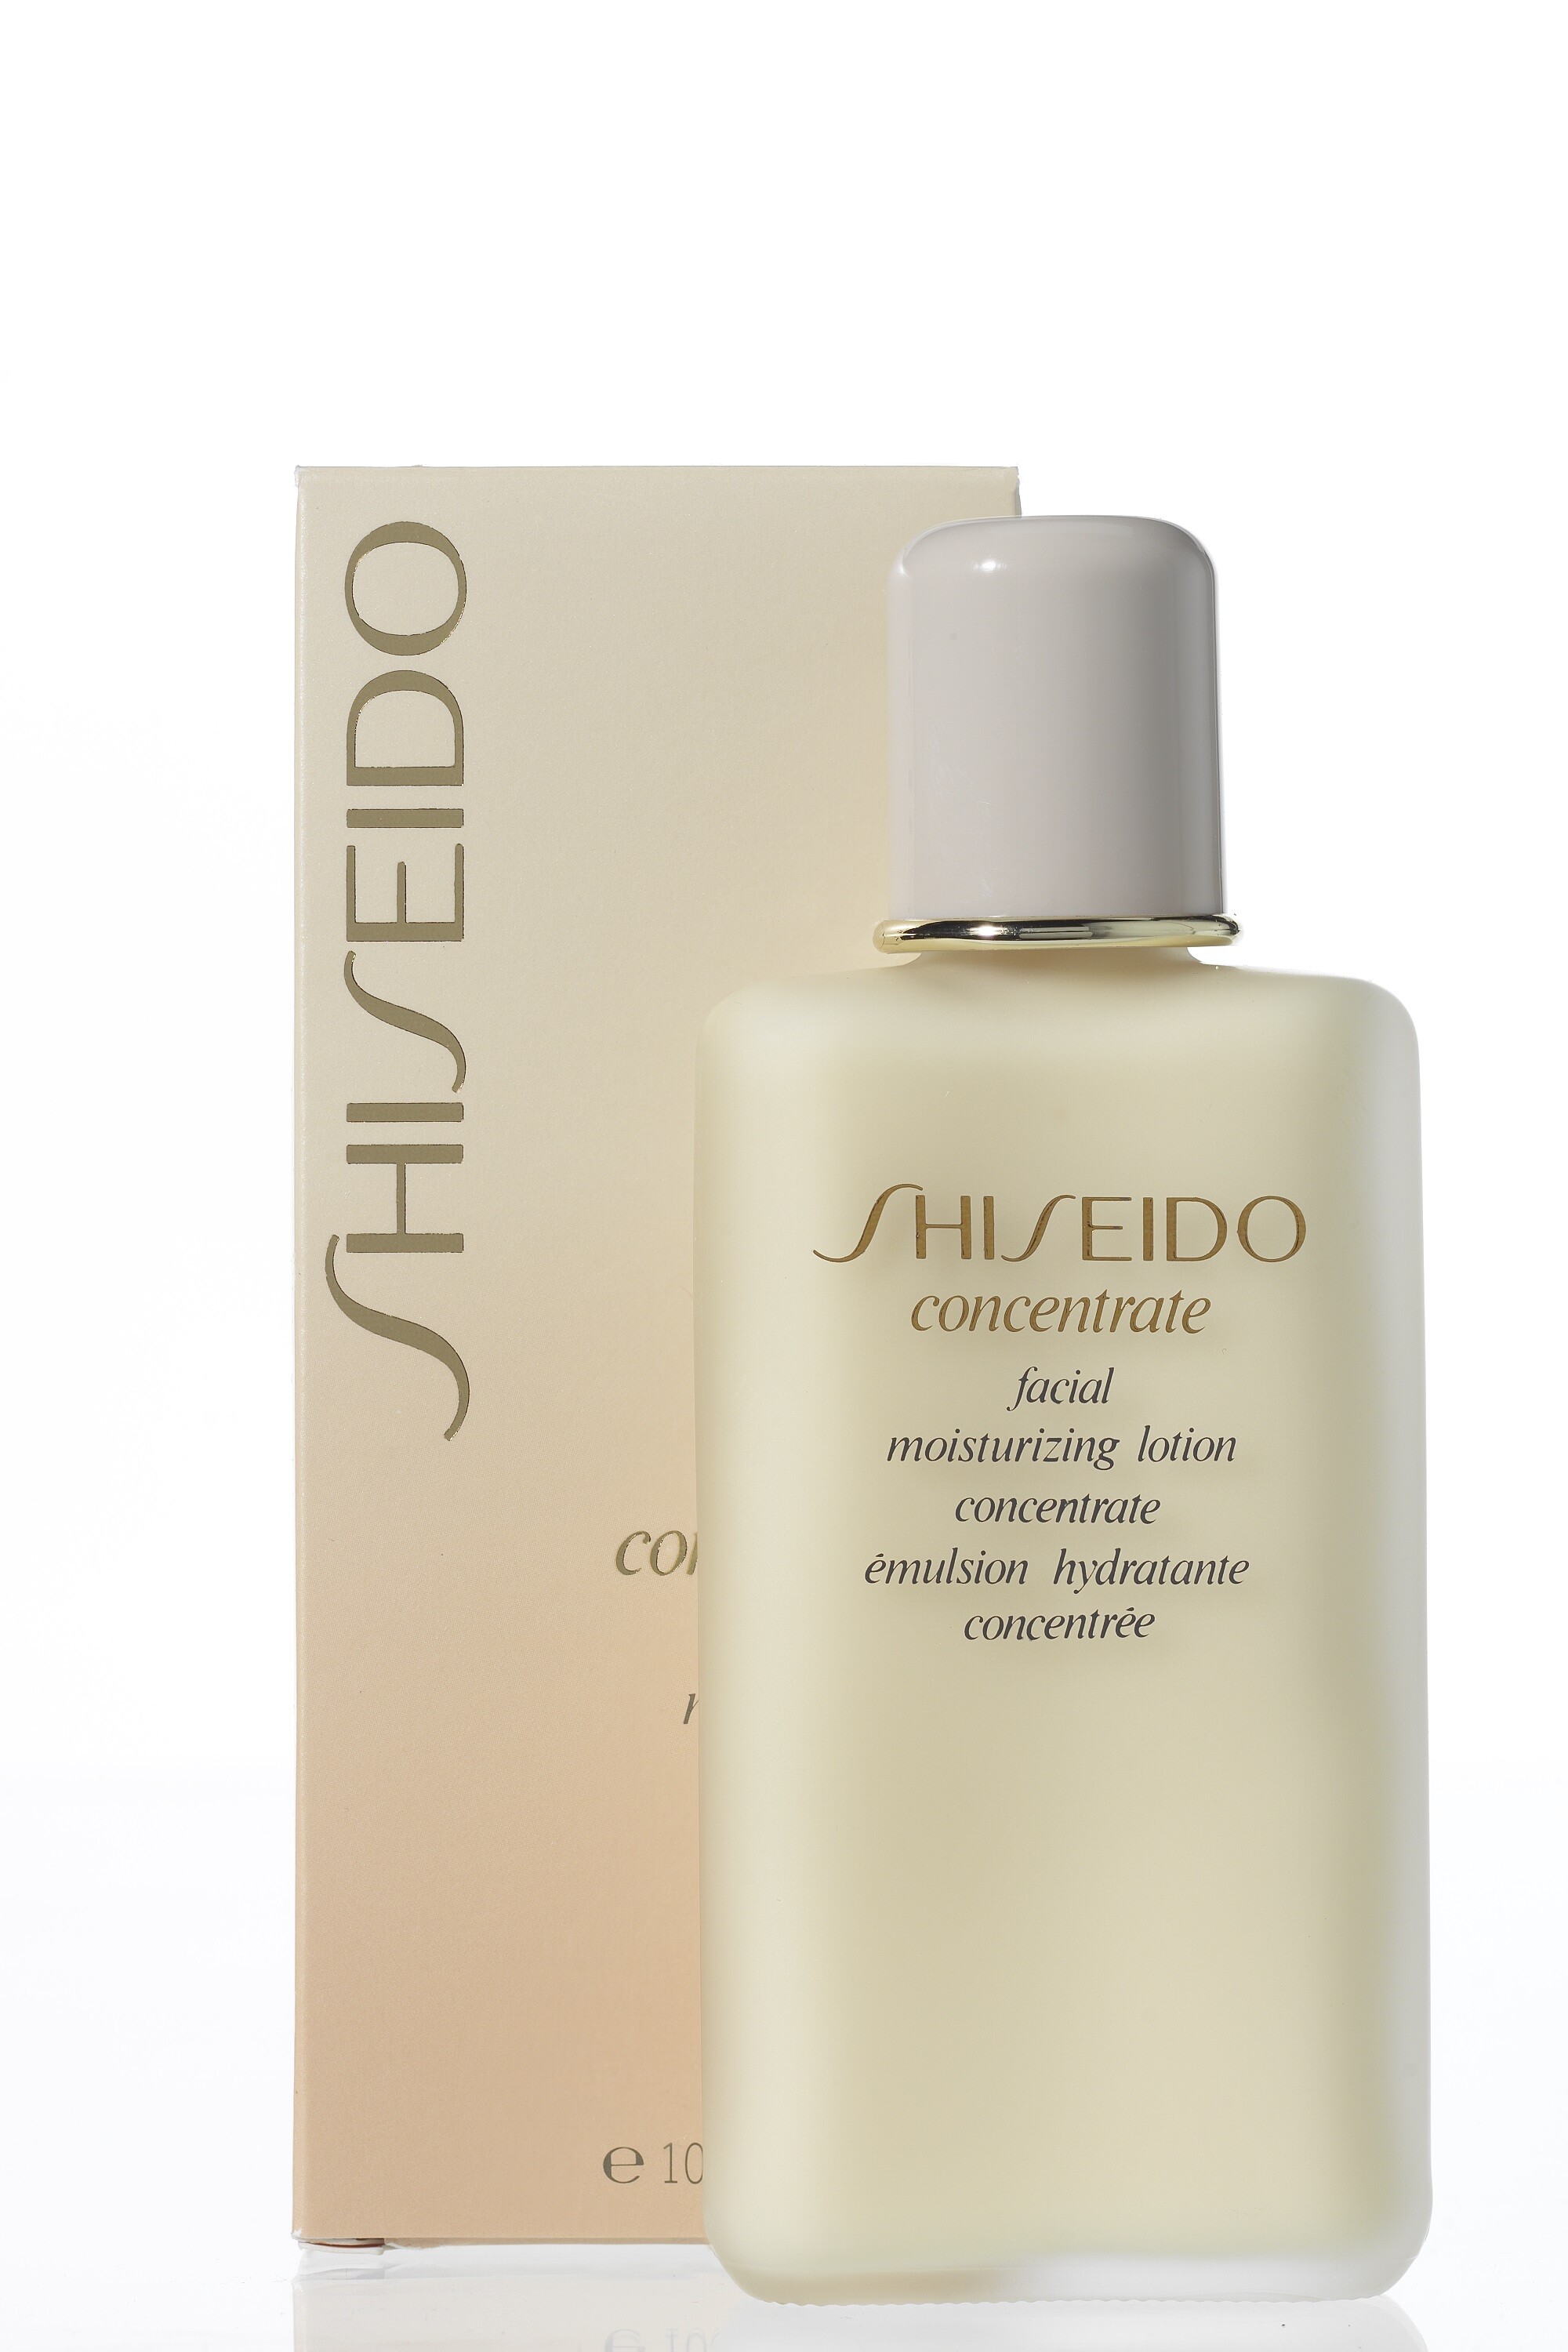 Feuchtigkeitscreme Shiseido Concentrate Facial Moisturizing Lotion 100ml kaufen